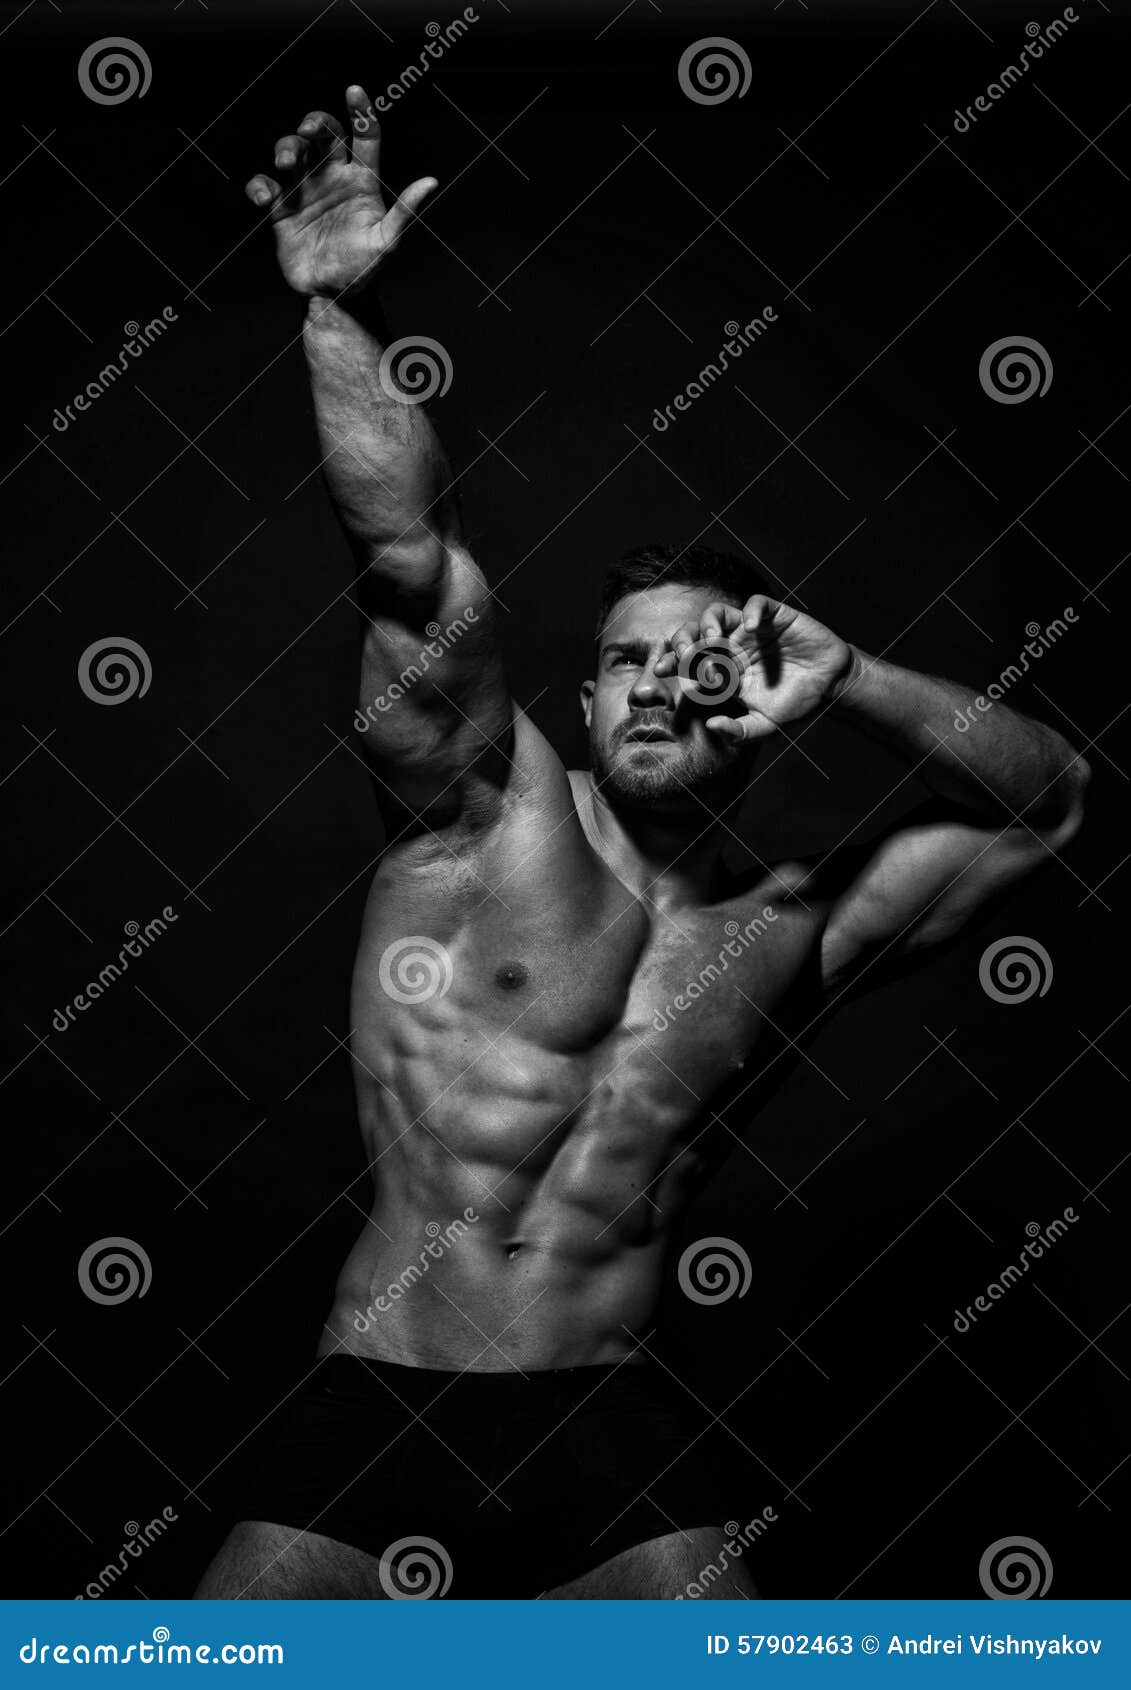 Konstantin Kamynin Modèle Masculin Musculeux Image stock - Image du  exercer, exercice: 57902463